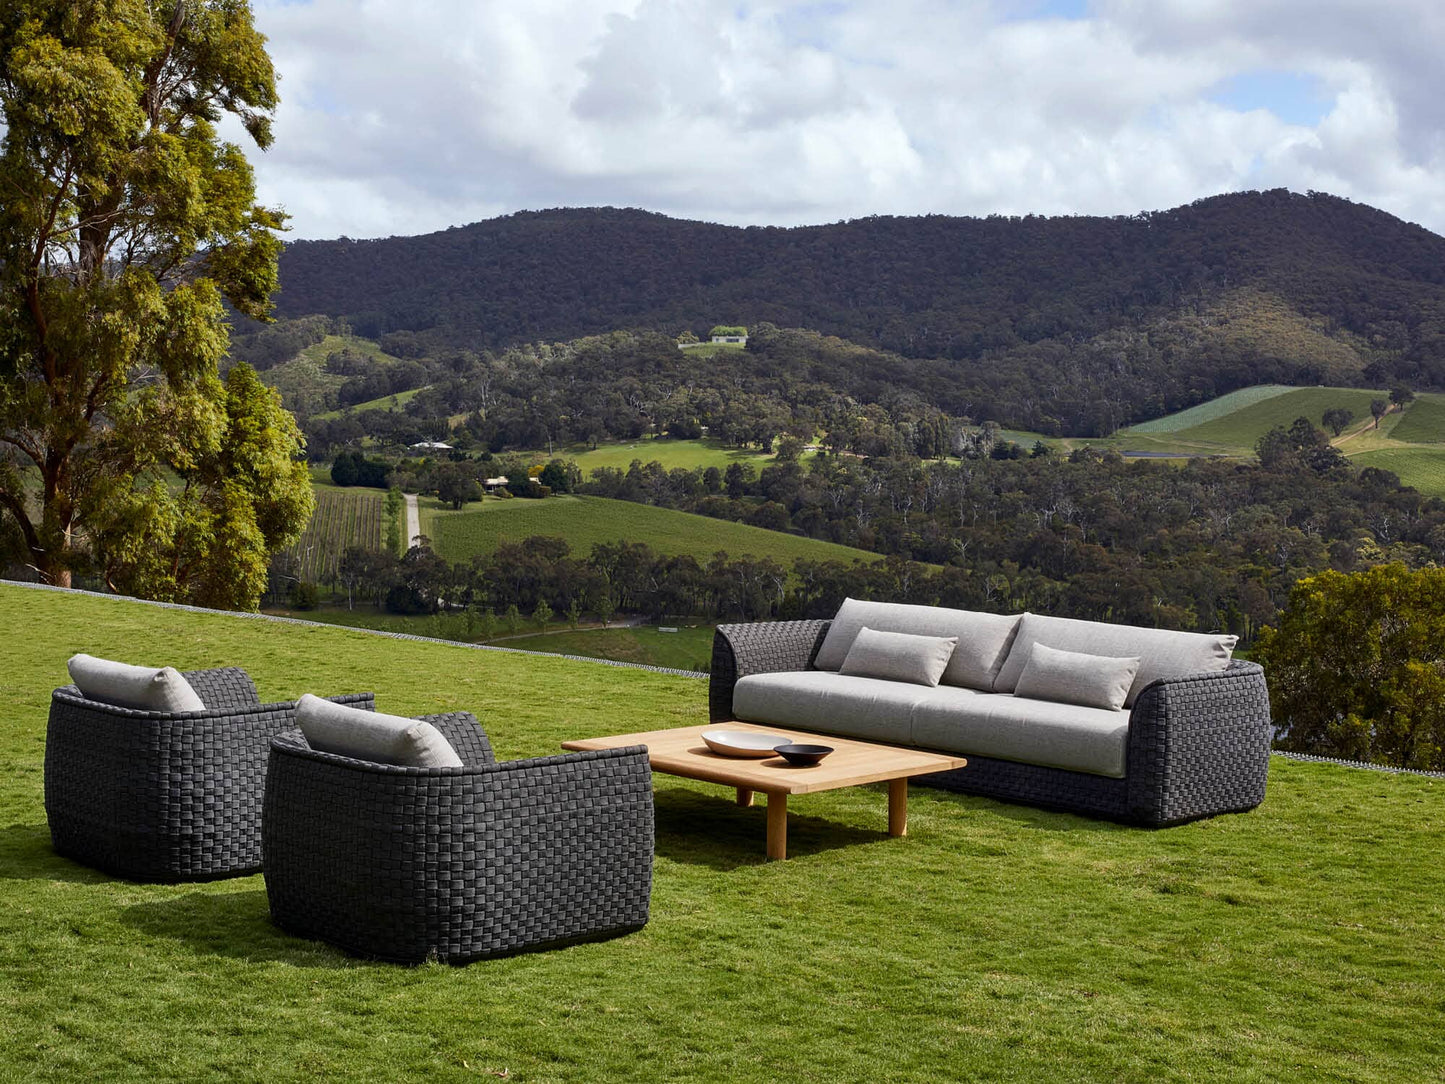 Apollo Lounge Chair 15% Off Outdoor Furniture Kett 